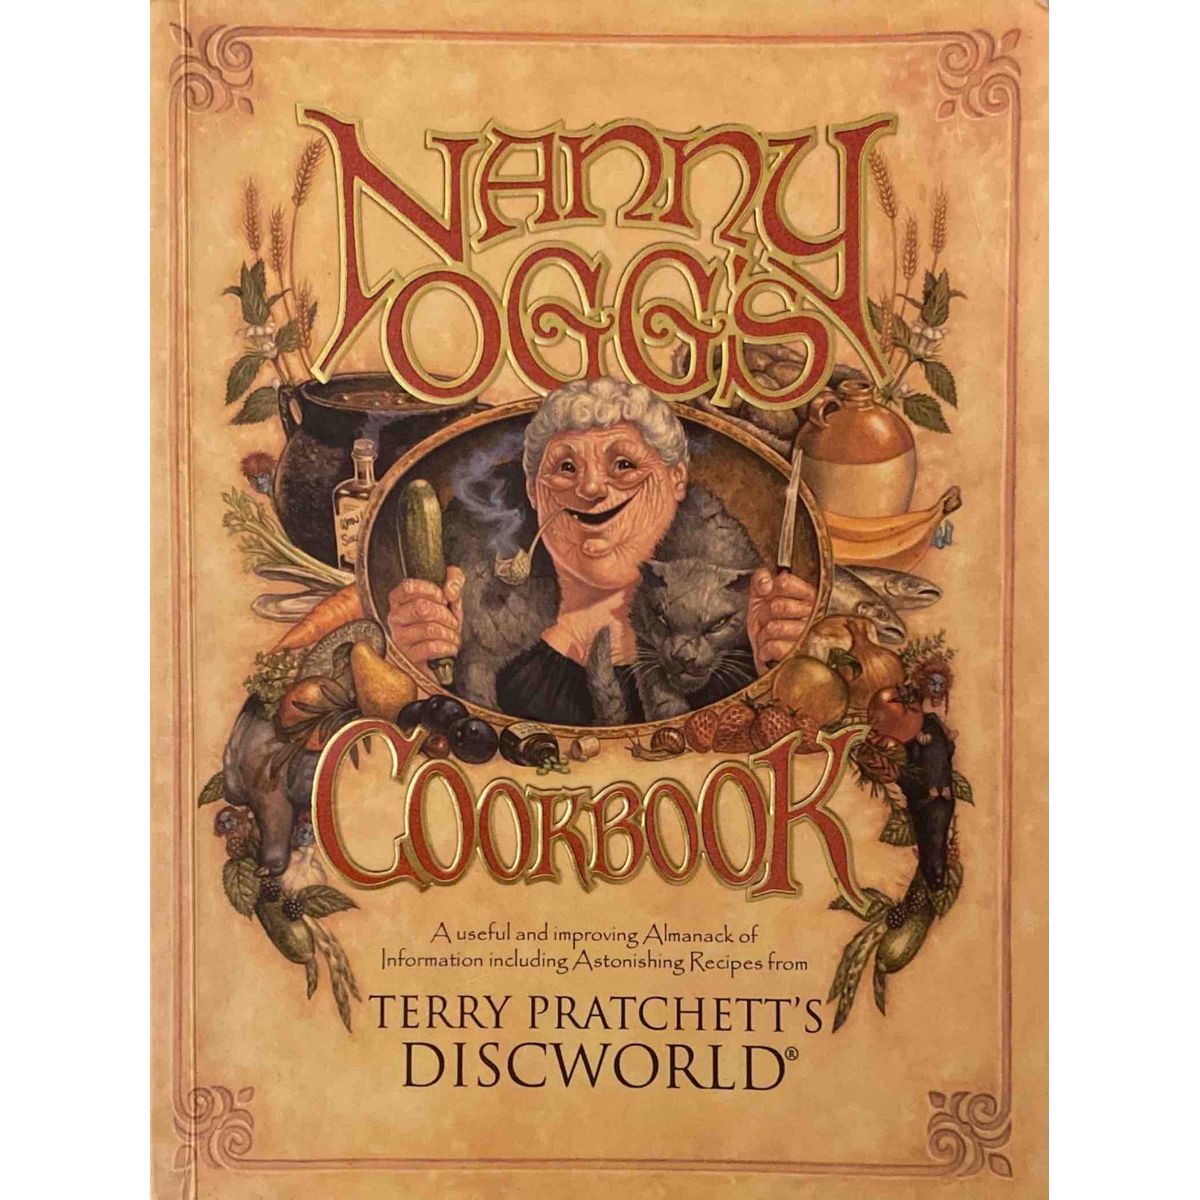 ISBN: 9780552146739 / 0552146730 - Nanny Ogg's Cookbook by Terry Pratchett et.al. [2001]